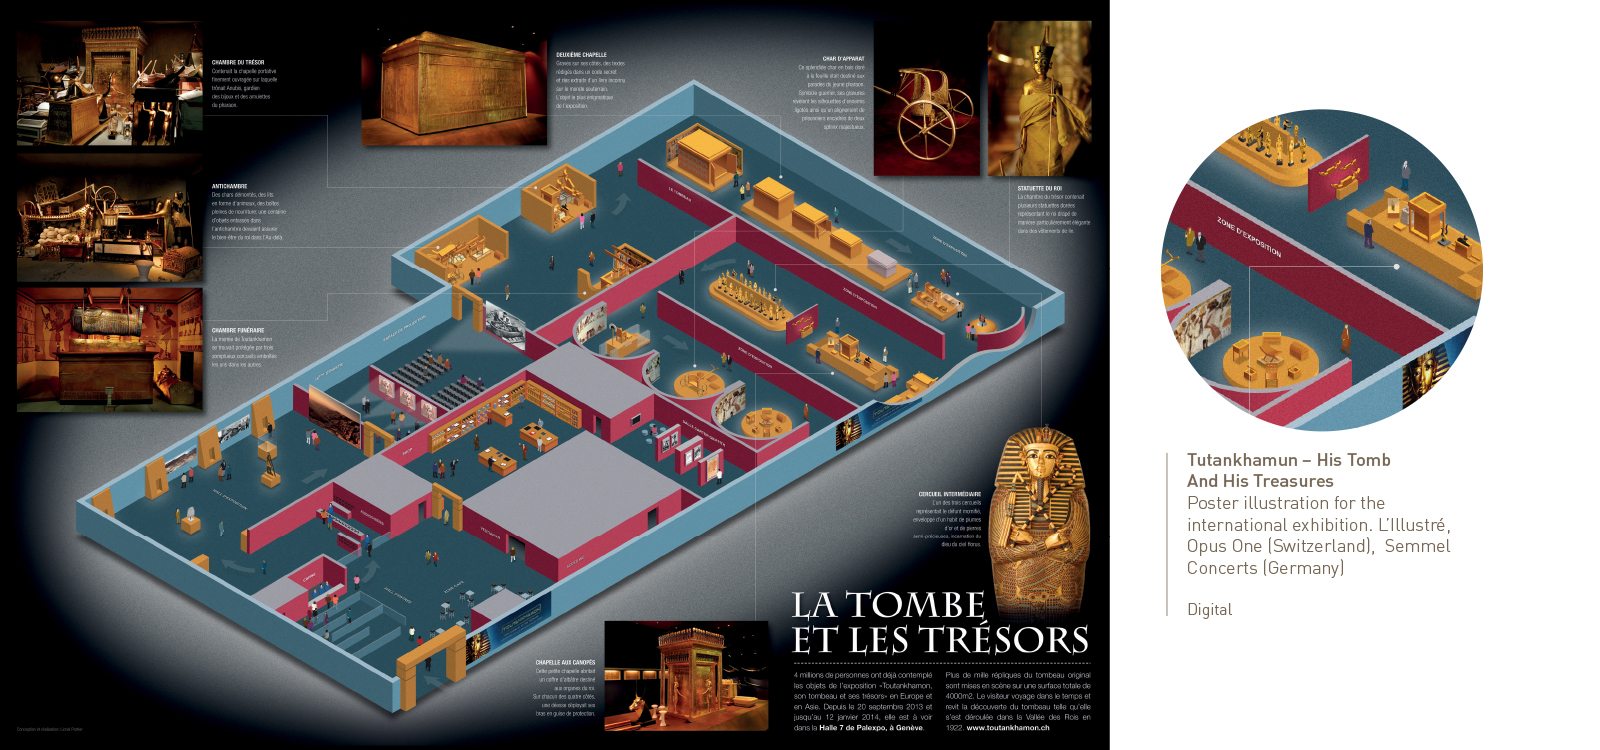 Tutankhamun exhibition poster by Lionel Portier